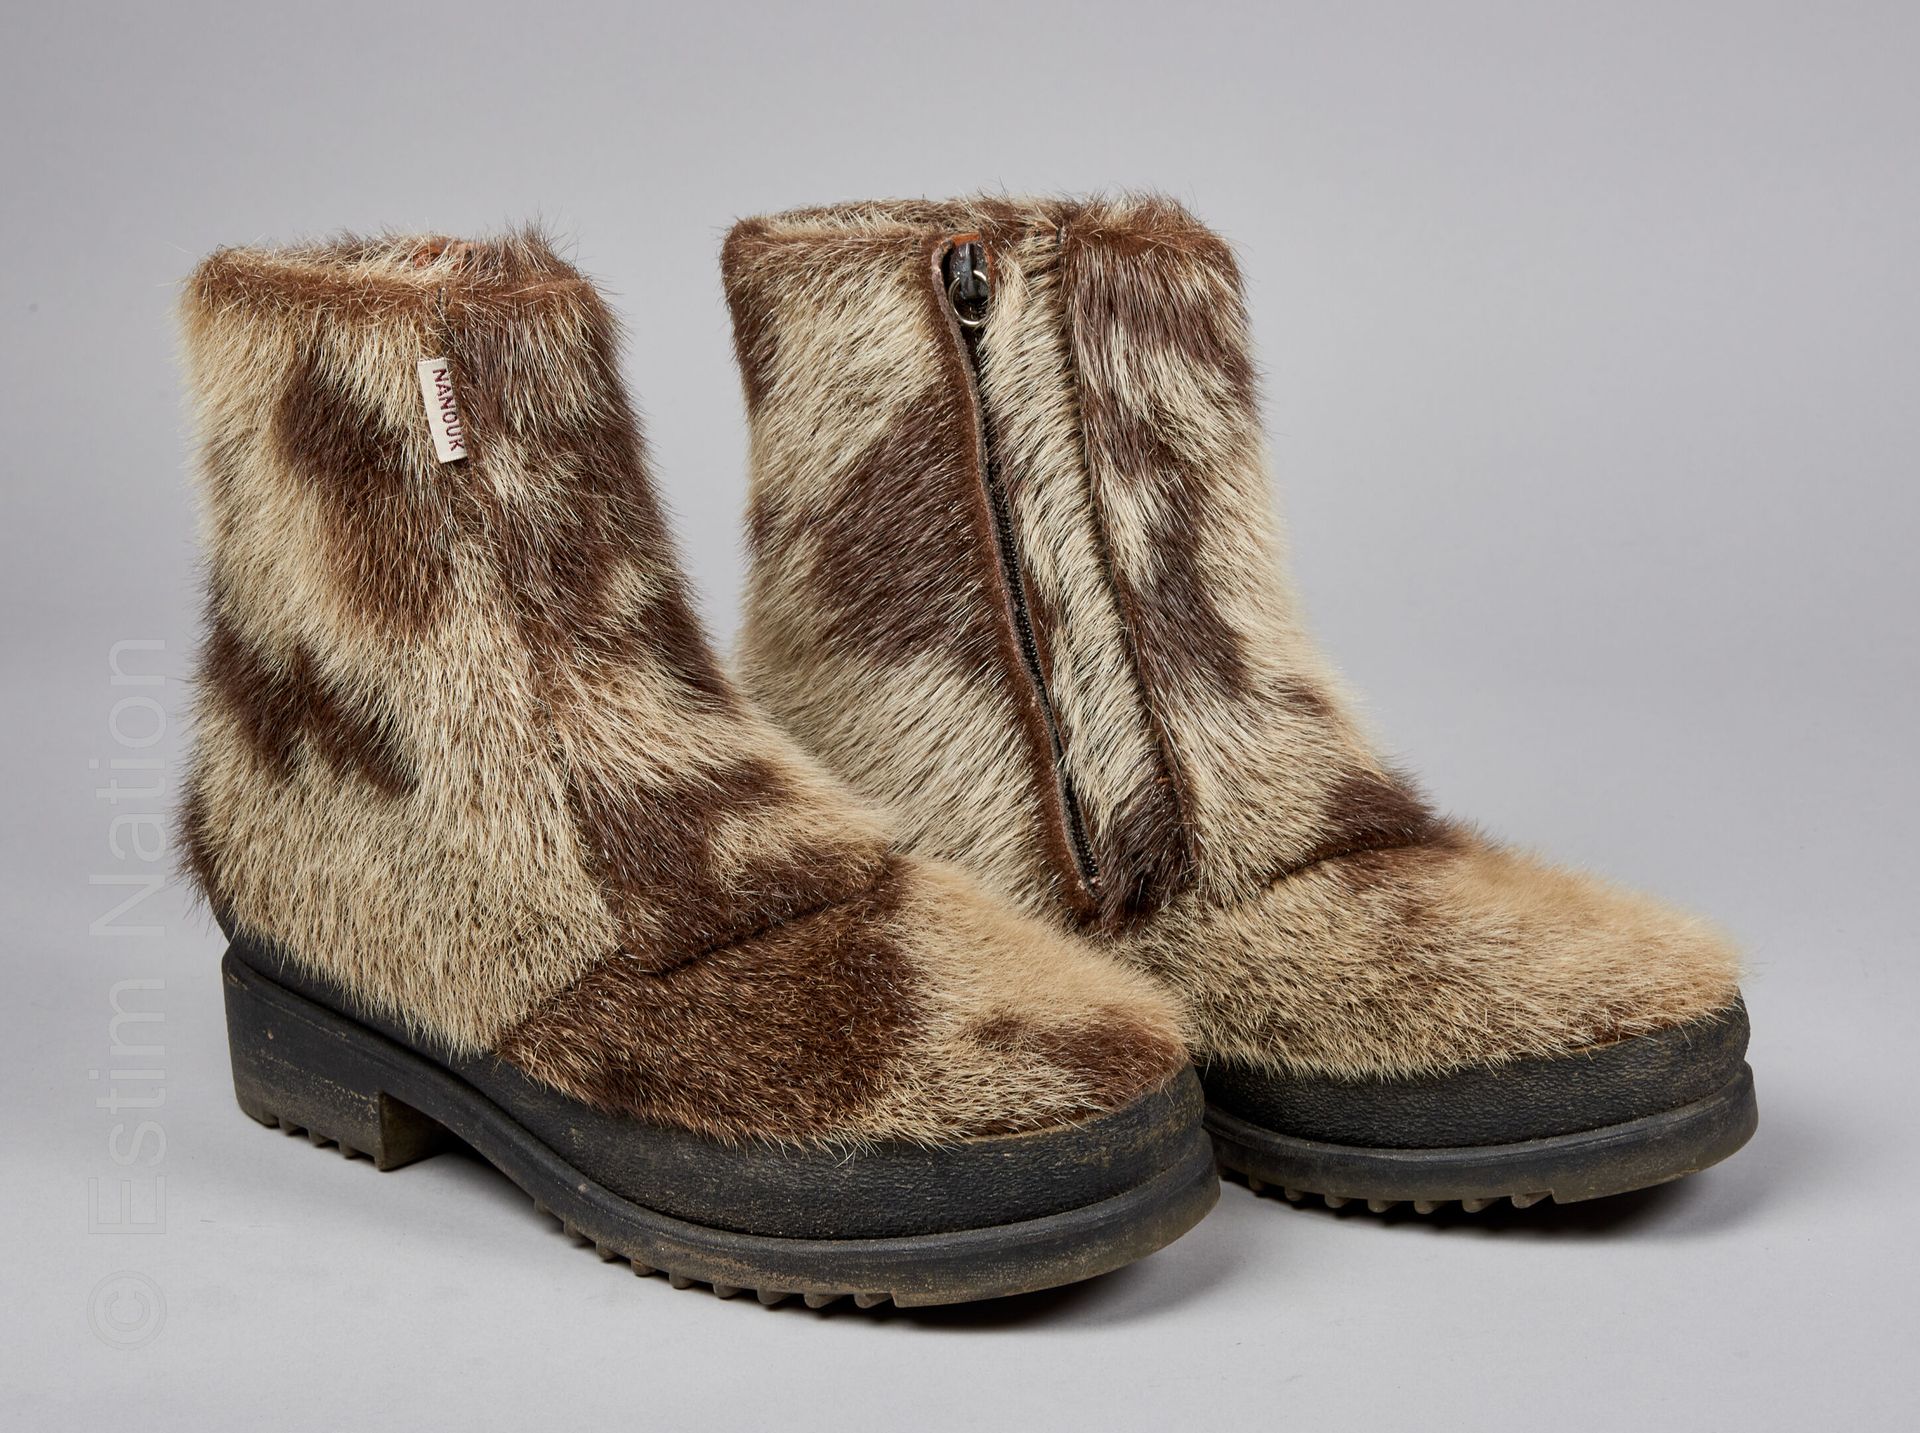 NANOUK CIRCA 1970 一对环形海豹雪靴，复合鞋底（P43）。(Pusa hispida的标本，非管制物种)